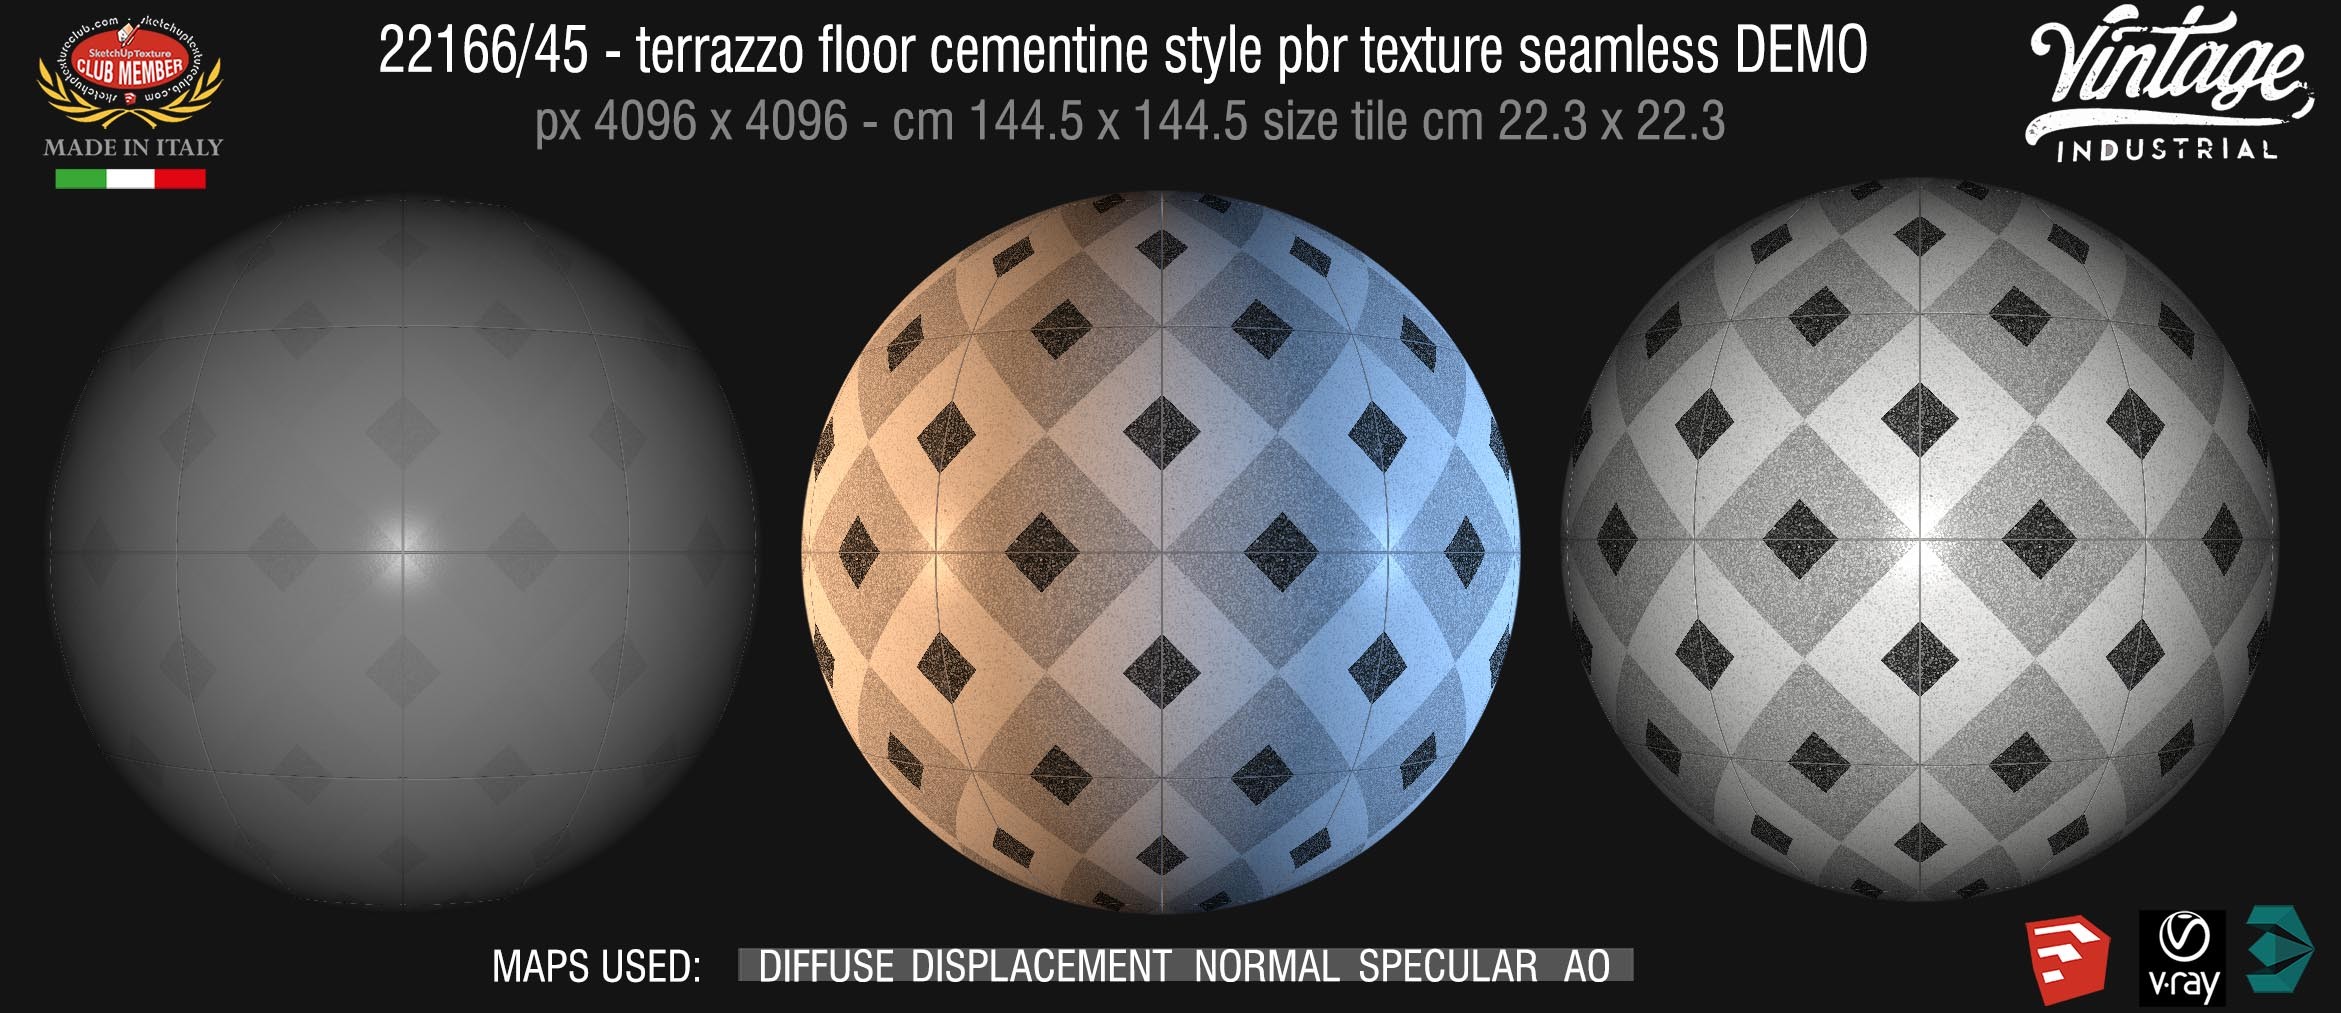 22166/45 terrazzo floor cementine style pbr texture seamless DEMO - A new range of micro-terrazzo tiles reminiscent of vintage cement tiles